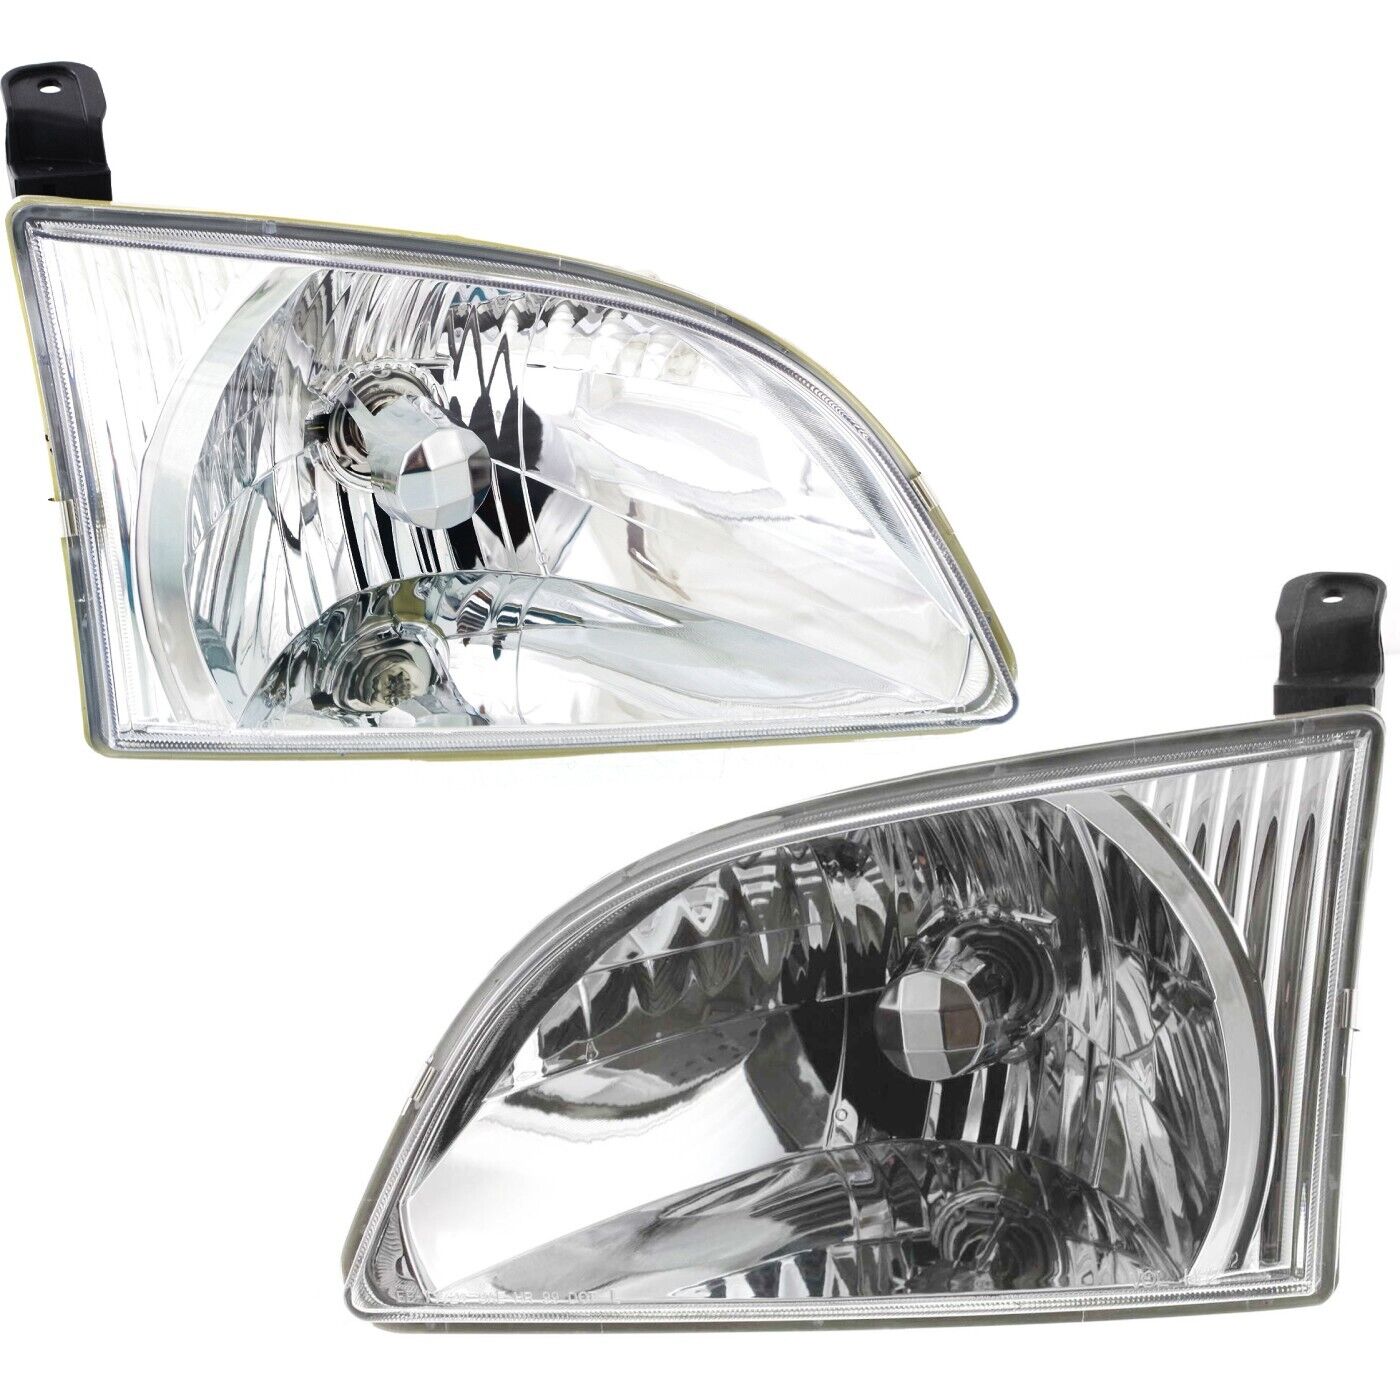 Headlights Headlamps Pair Set Left LH & Right RH for 01-03 Toyota Sienna